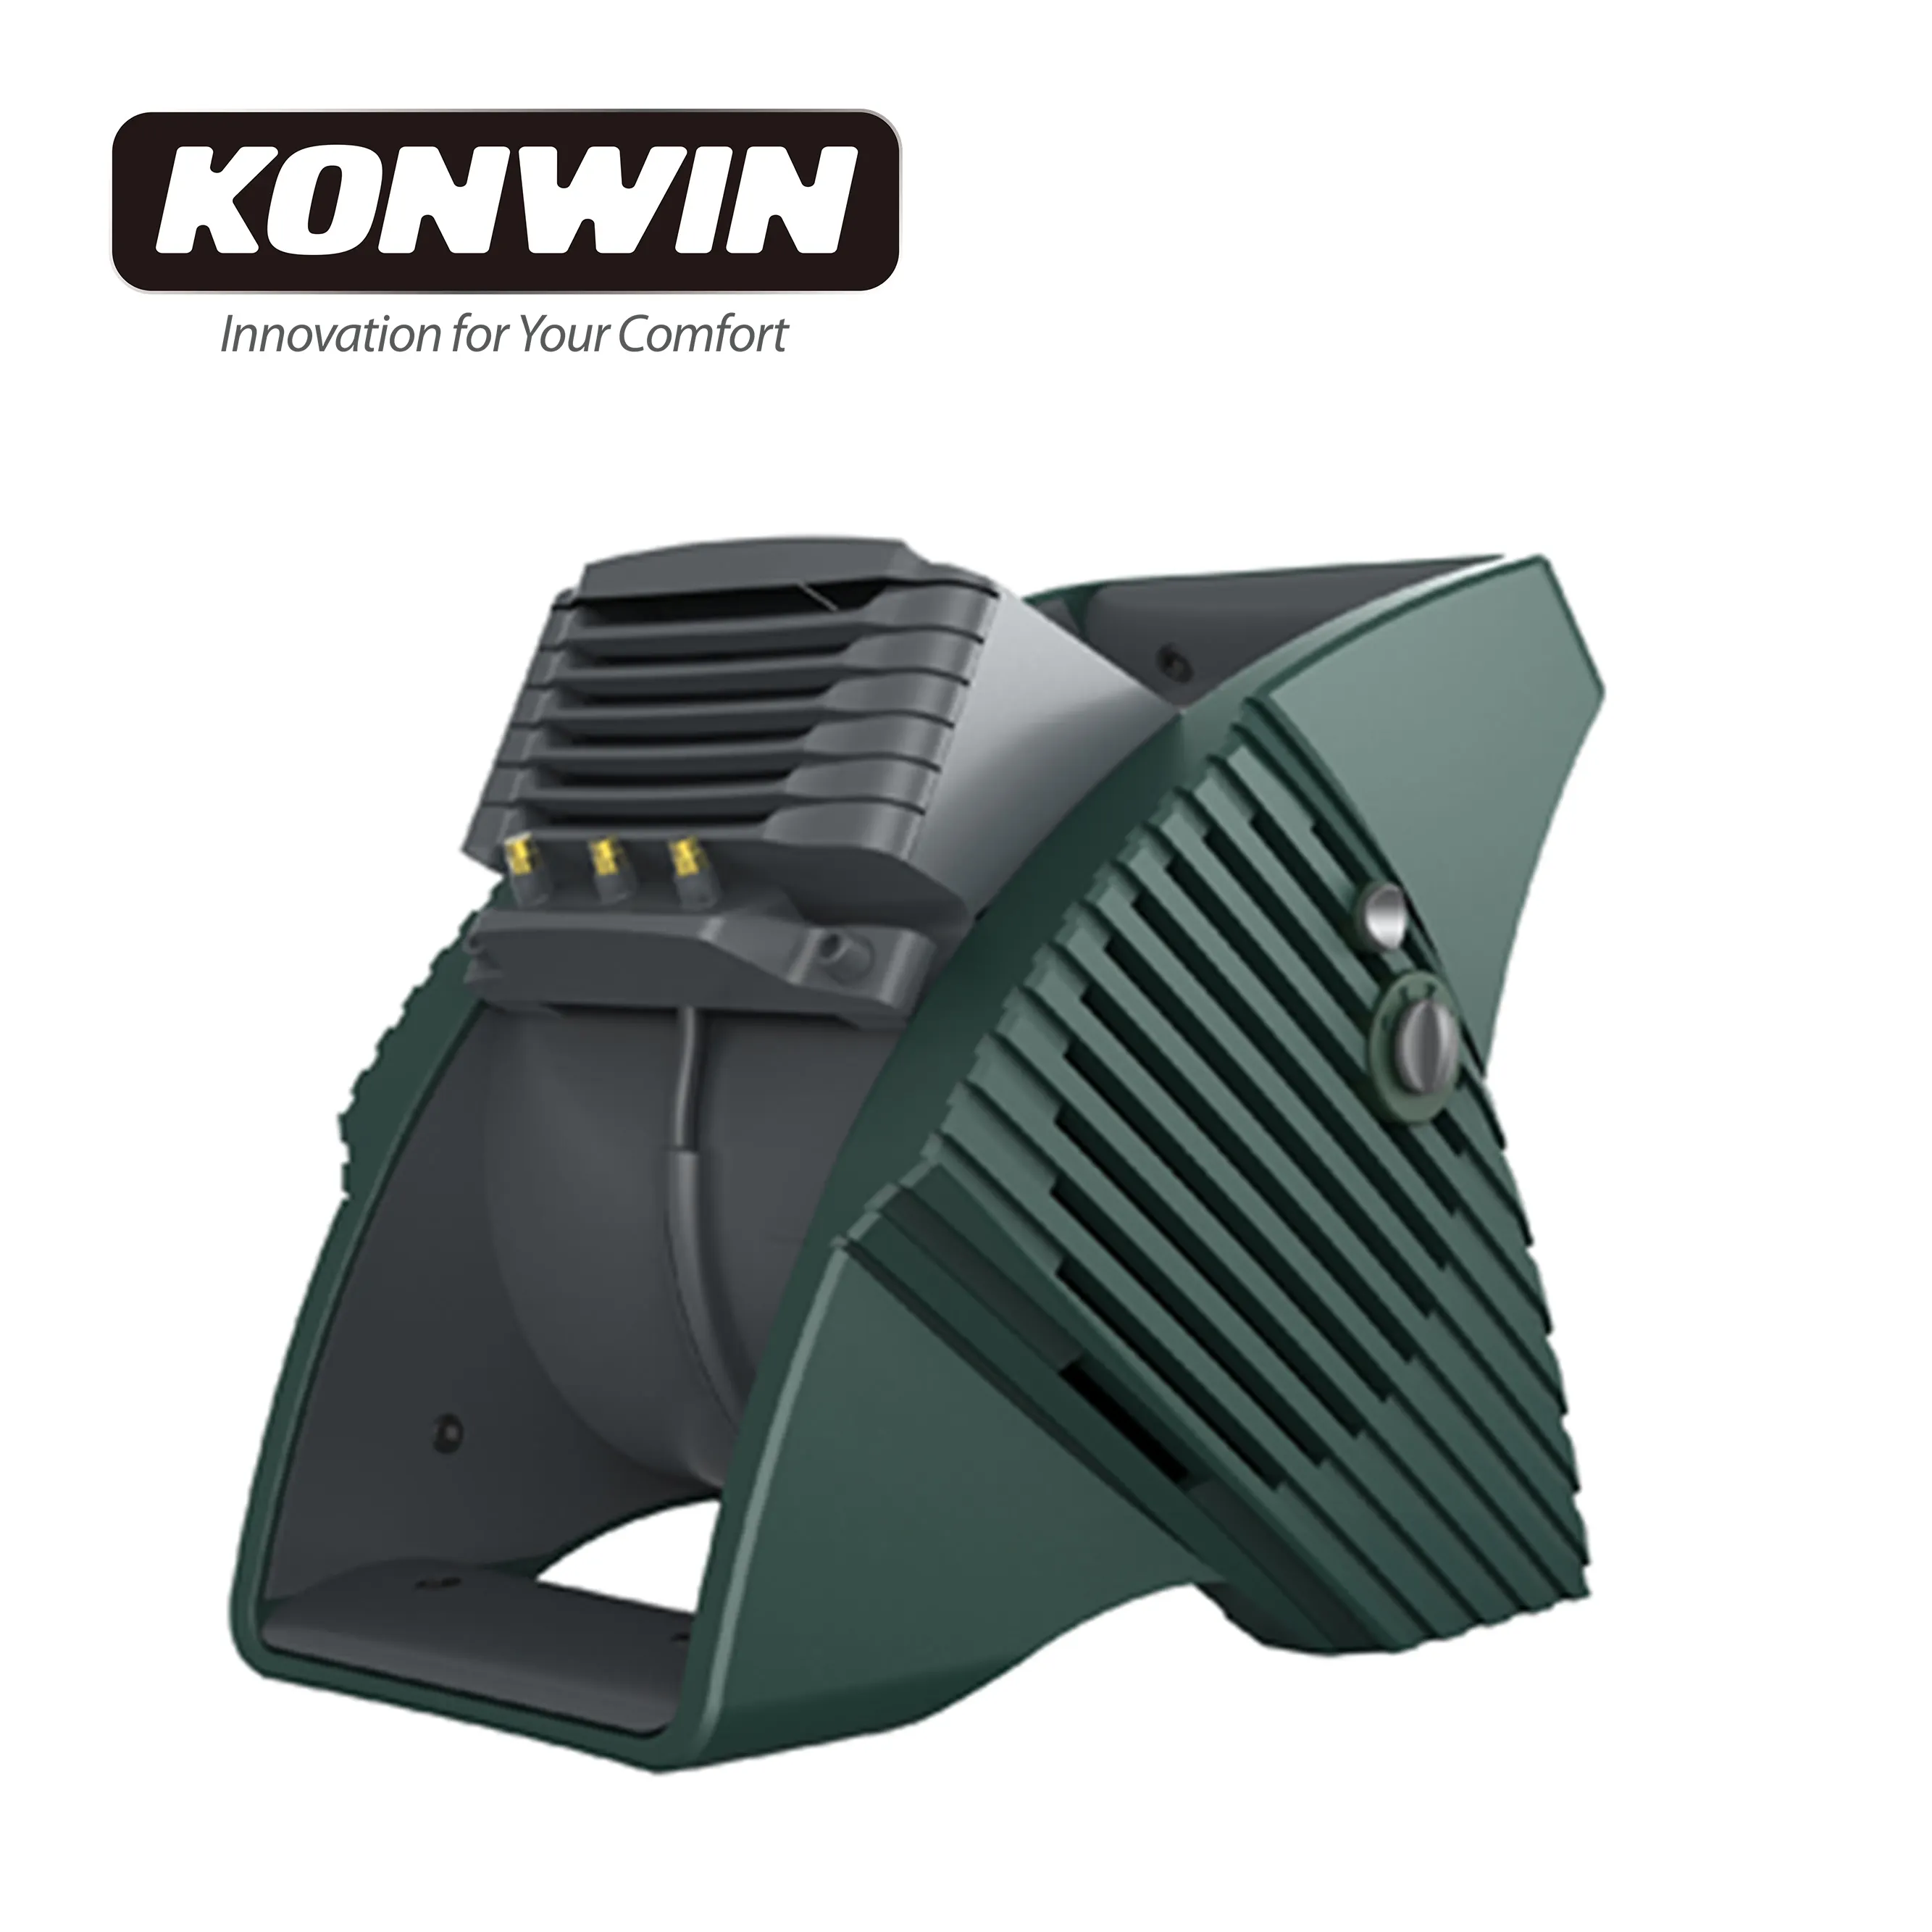 KONWIN Air Mover Utility Blower Fan for Water Damage Restoration Equipment Carpet Dryer Floor Blower Fan Home MAM-03